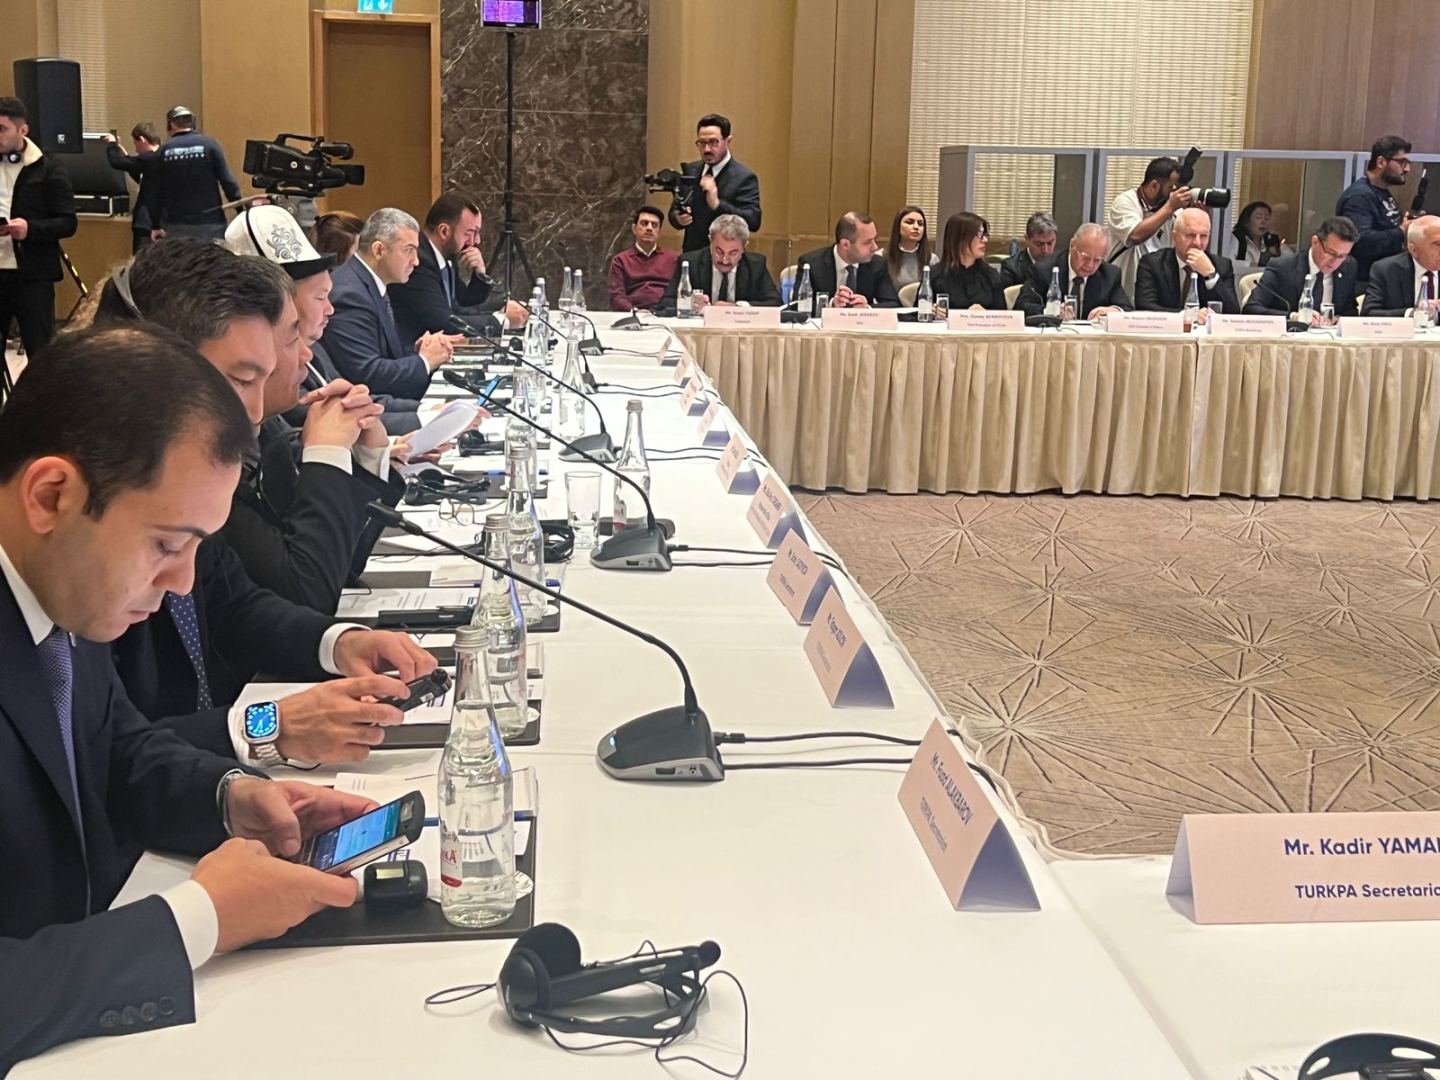 В Баку прошла конференция на тему "Гейдар Алиев и парламентаризм" (ФОТО)